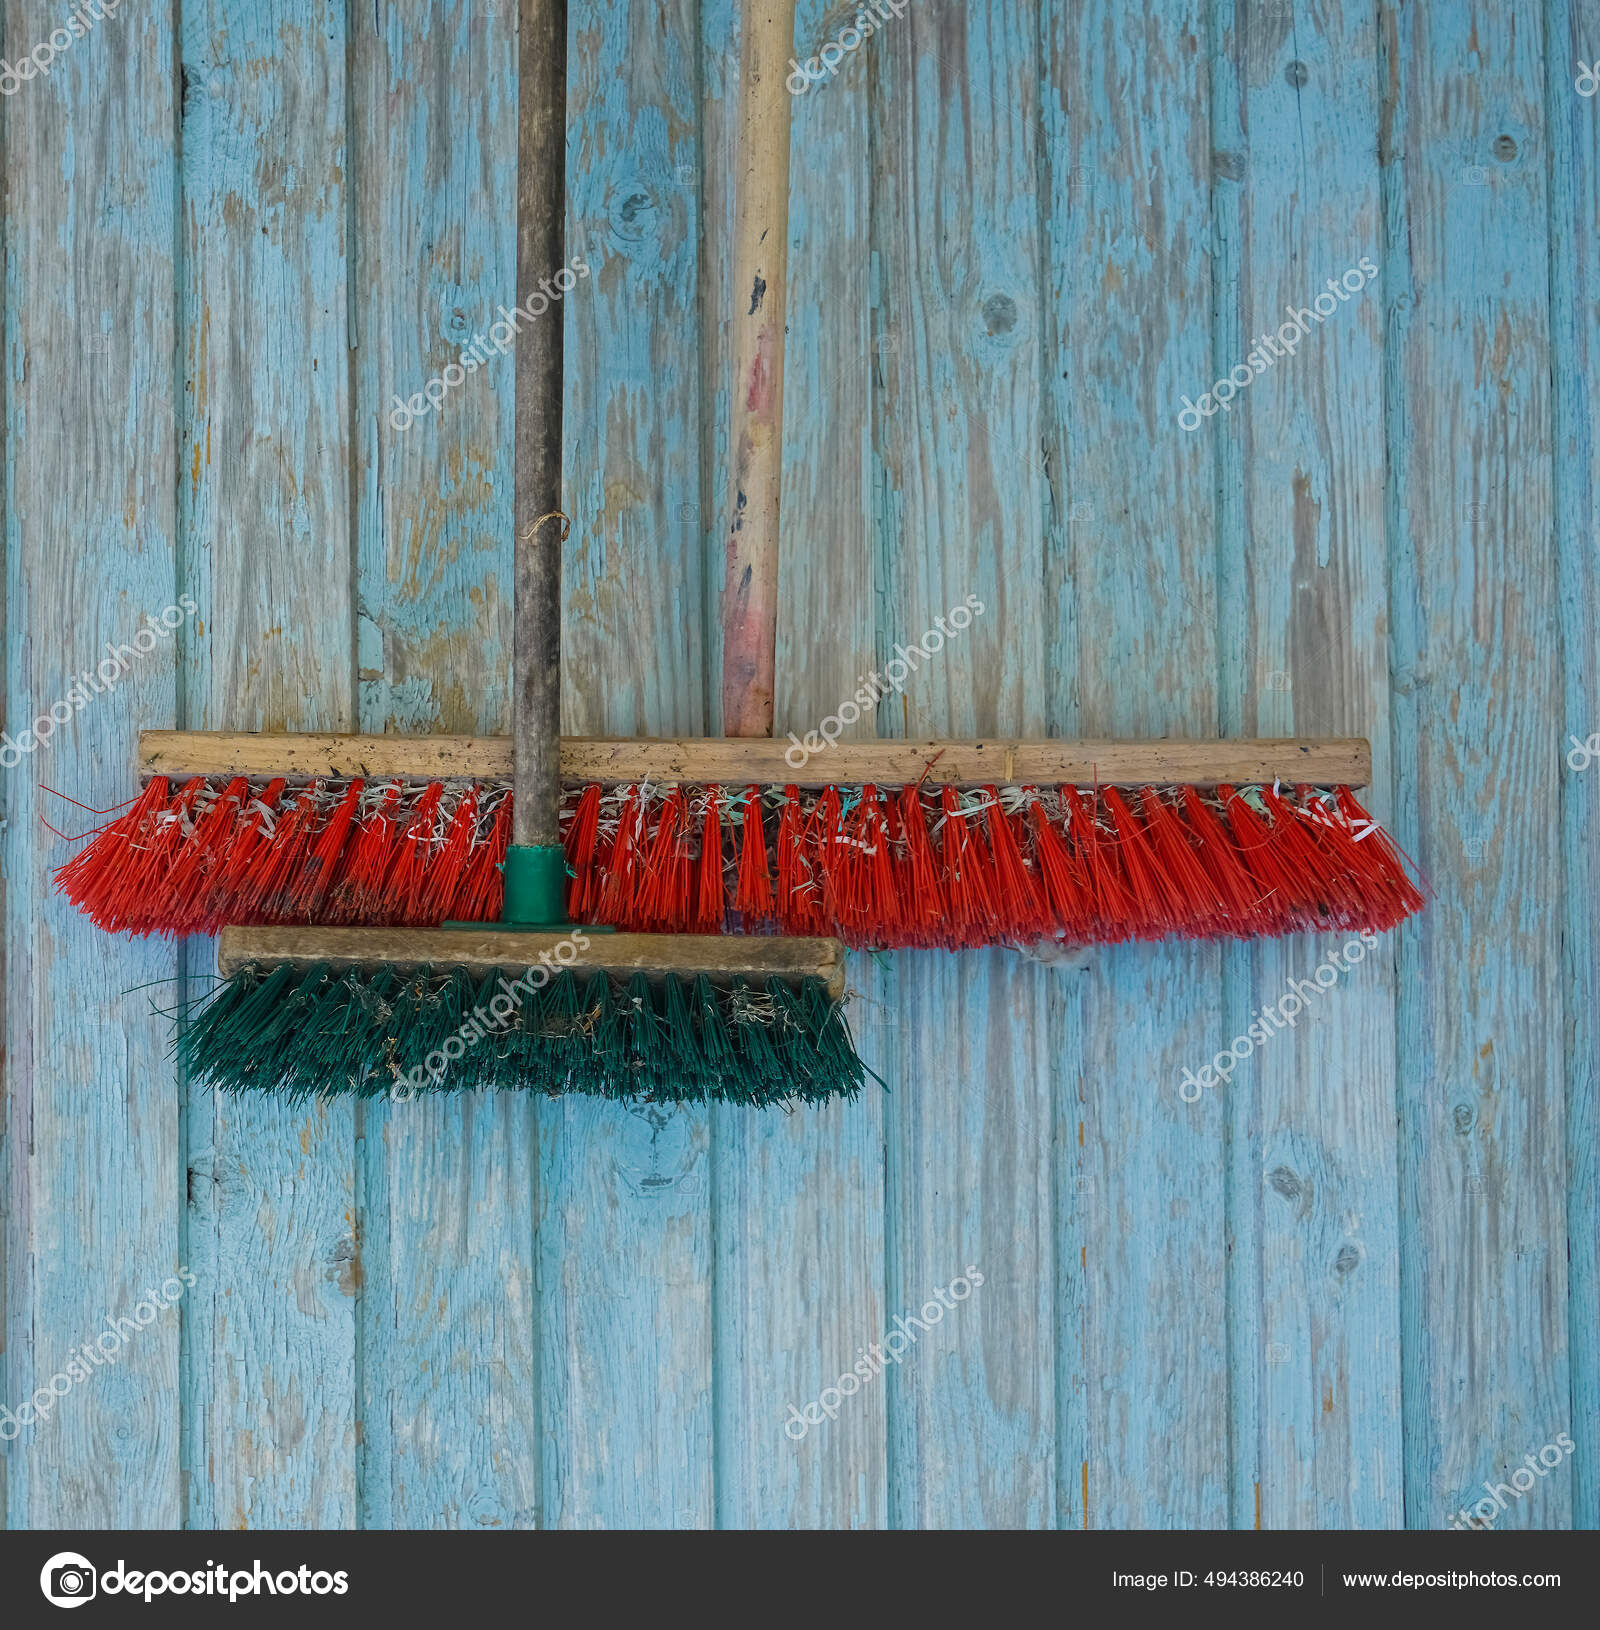 https://st2.depositphotos.com/5647624/49438/i/1600/depositphotos_494386240-stock-photo-two-dusty-brooms-long-wooden.jpg